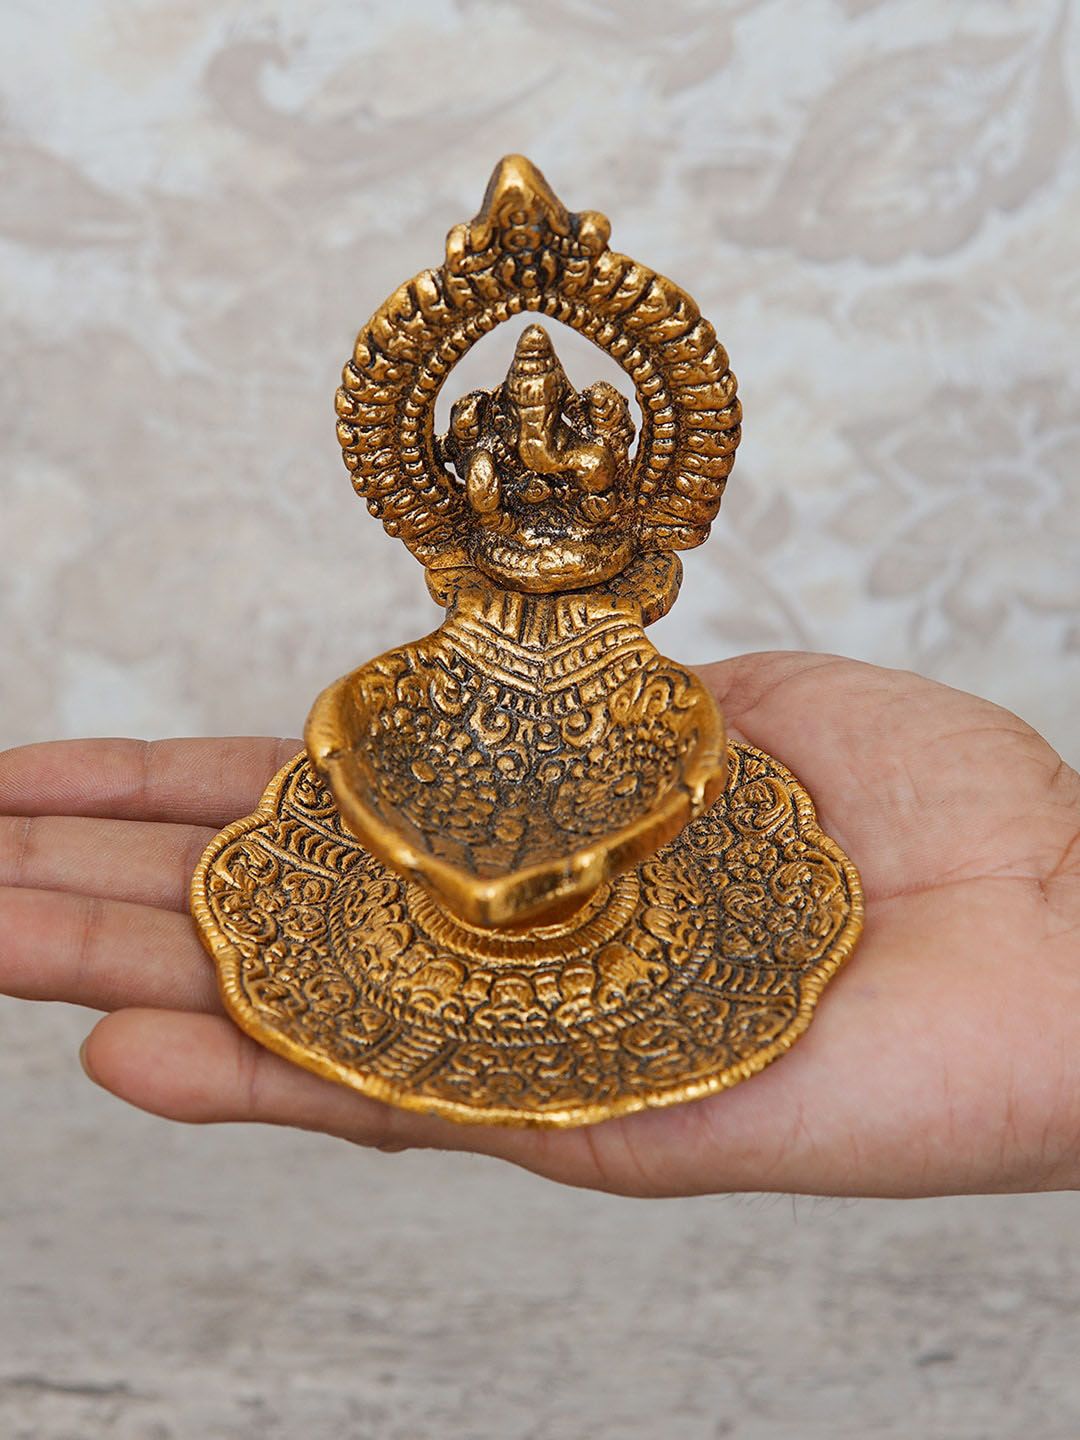 StatueStudio Gold-Toned Textured Ganesha Diya Price in India